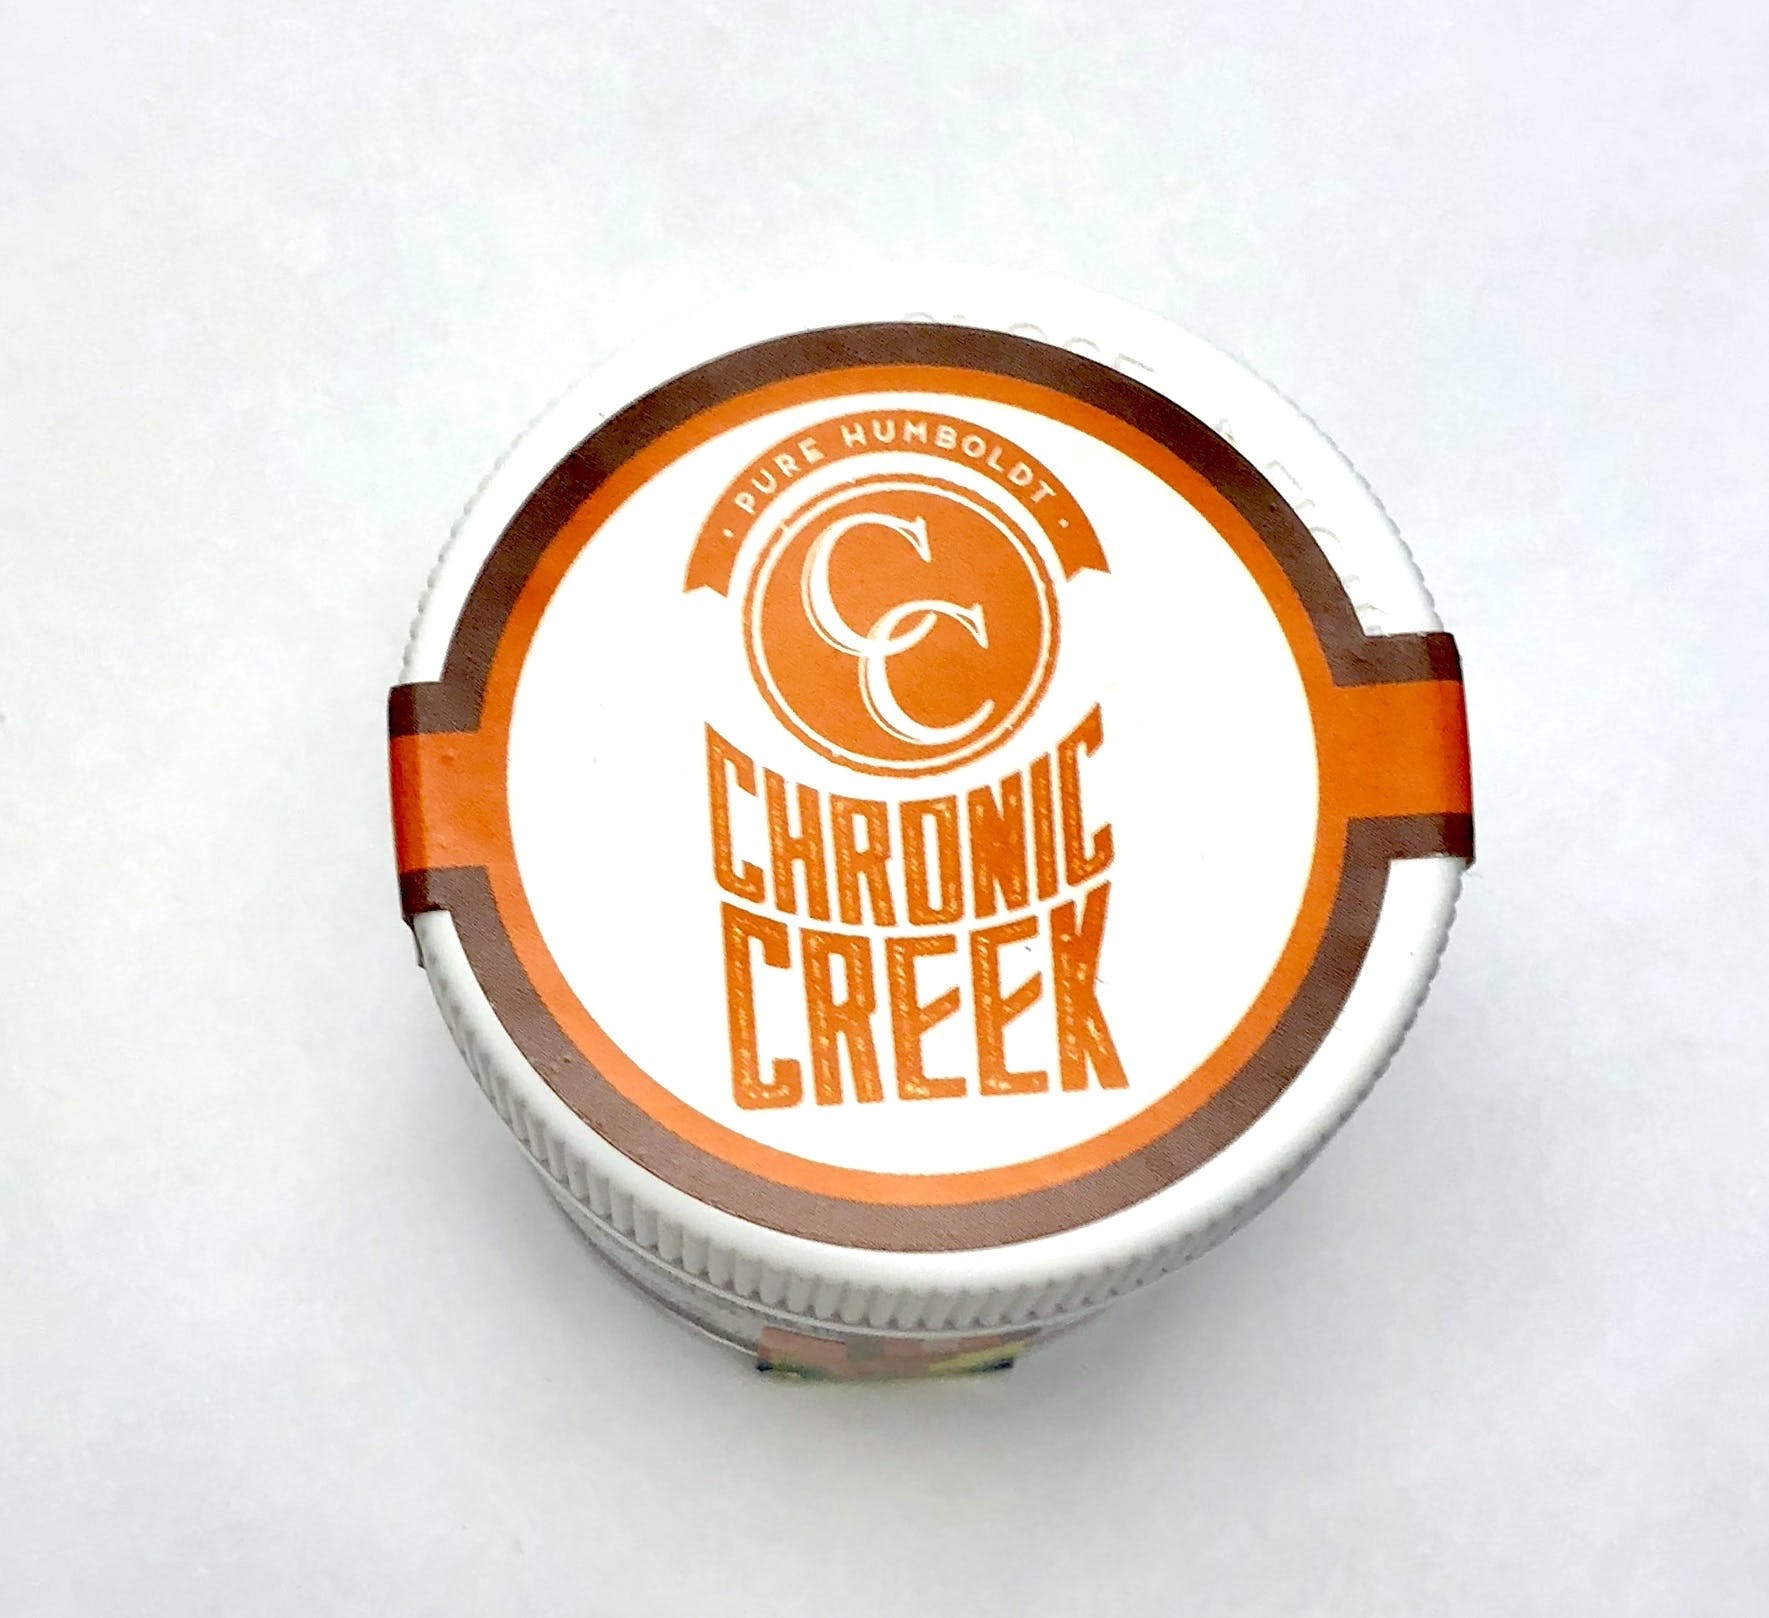 Chronic Creek - Dream Queen